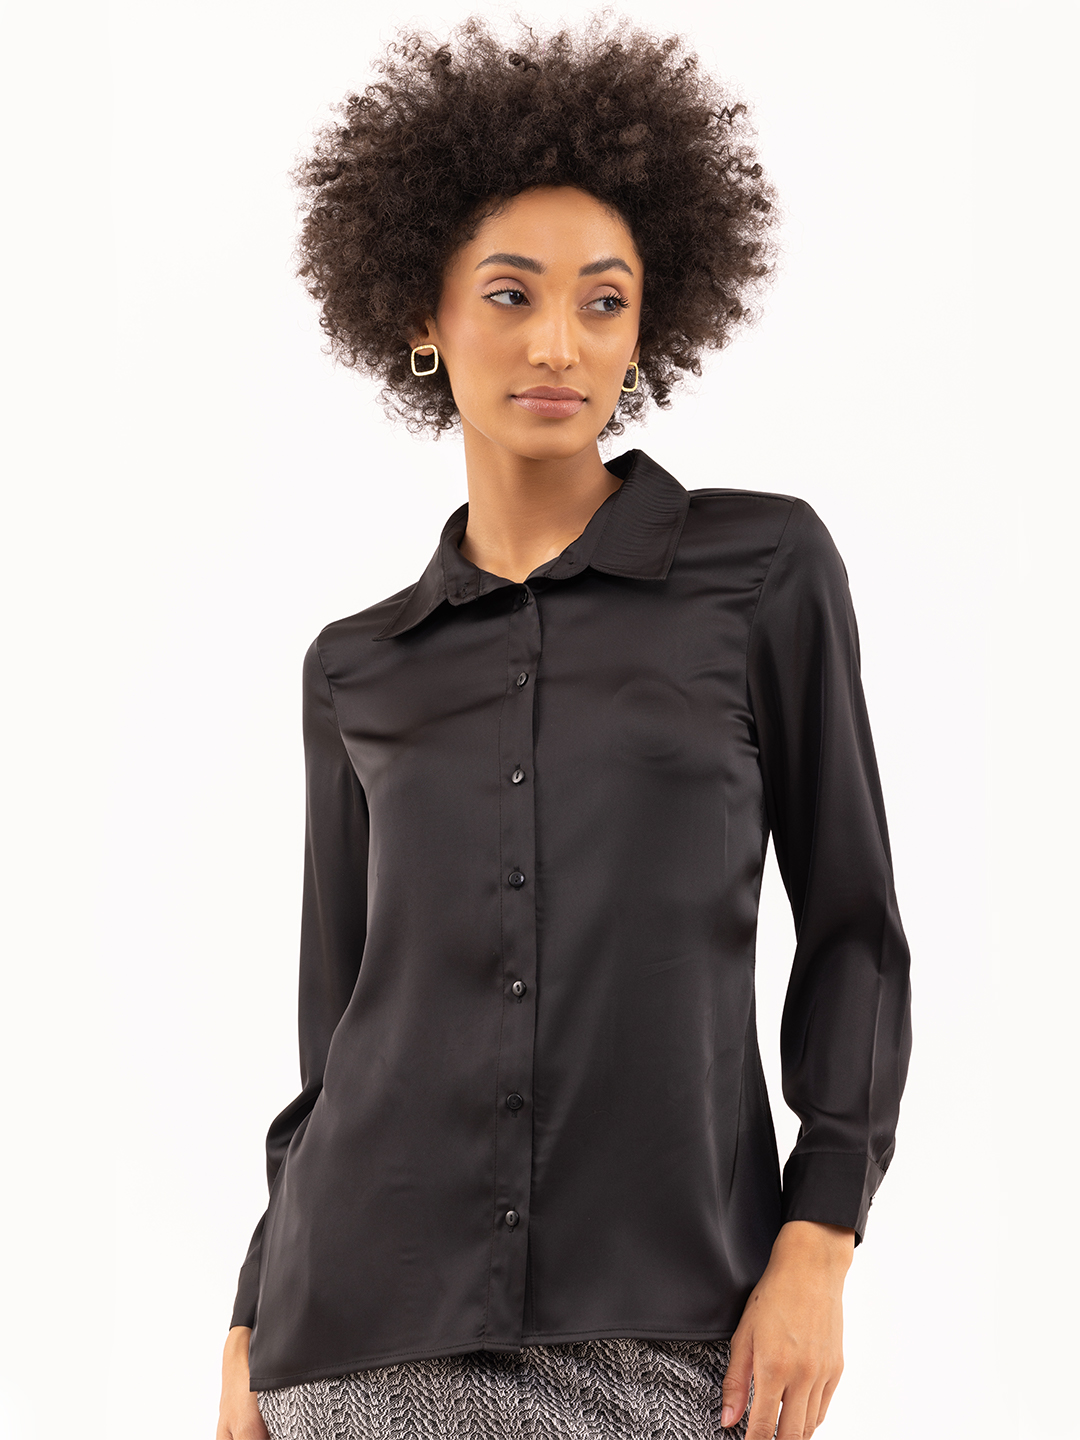 Black  9-5 Sleek Shirt - Front